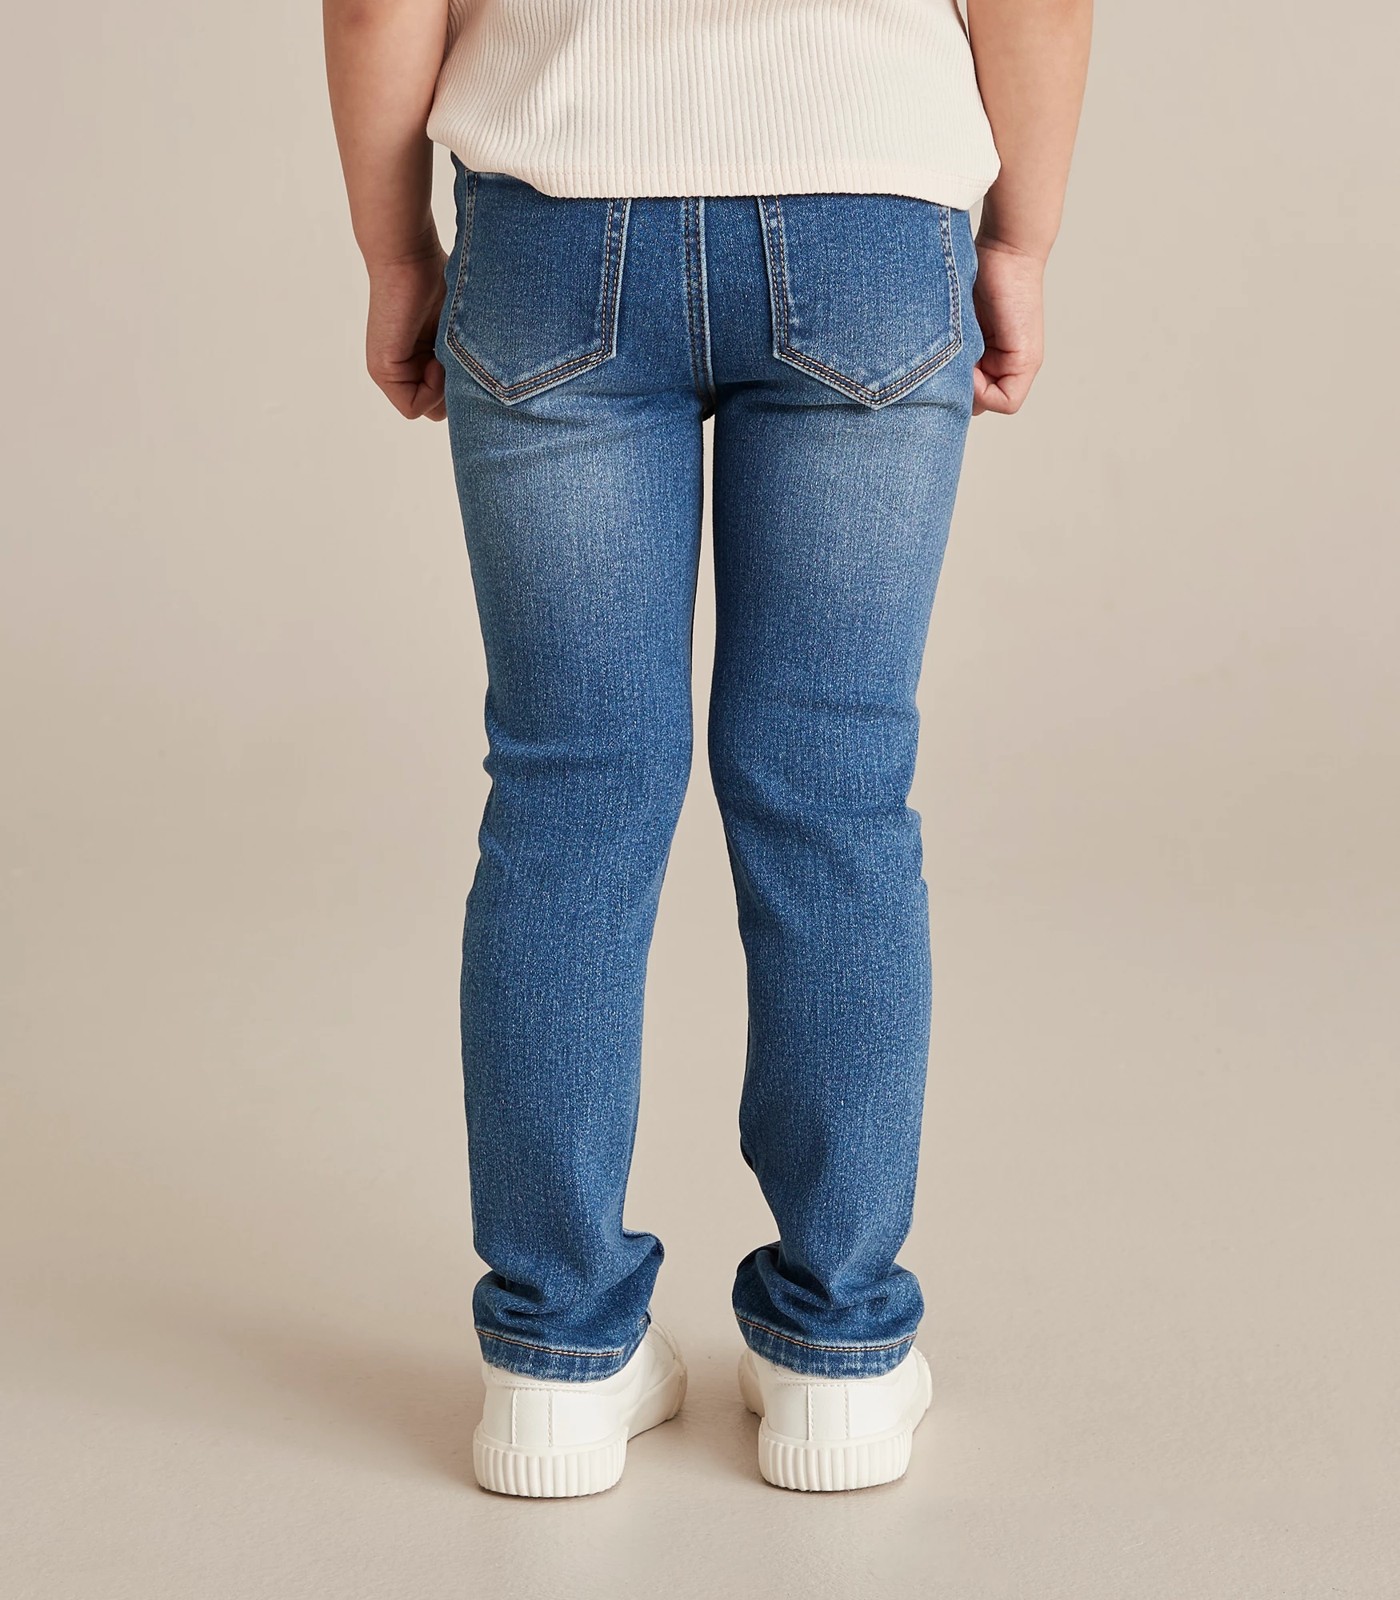 Denim Sophie Jnr Fitted Jeans | Target Australia